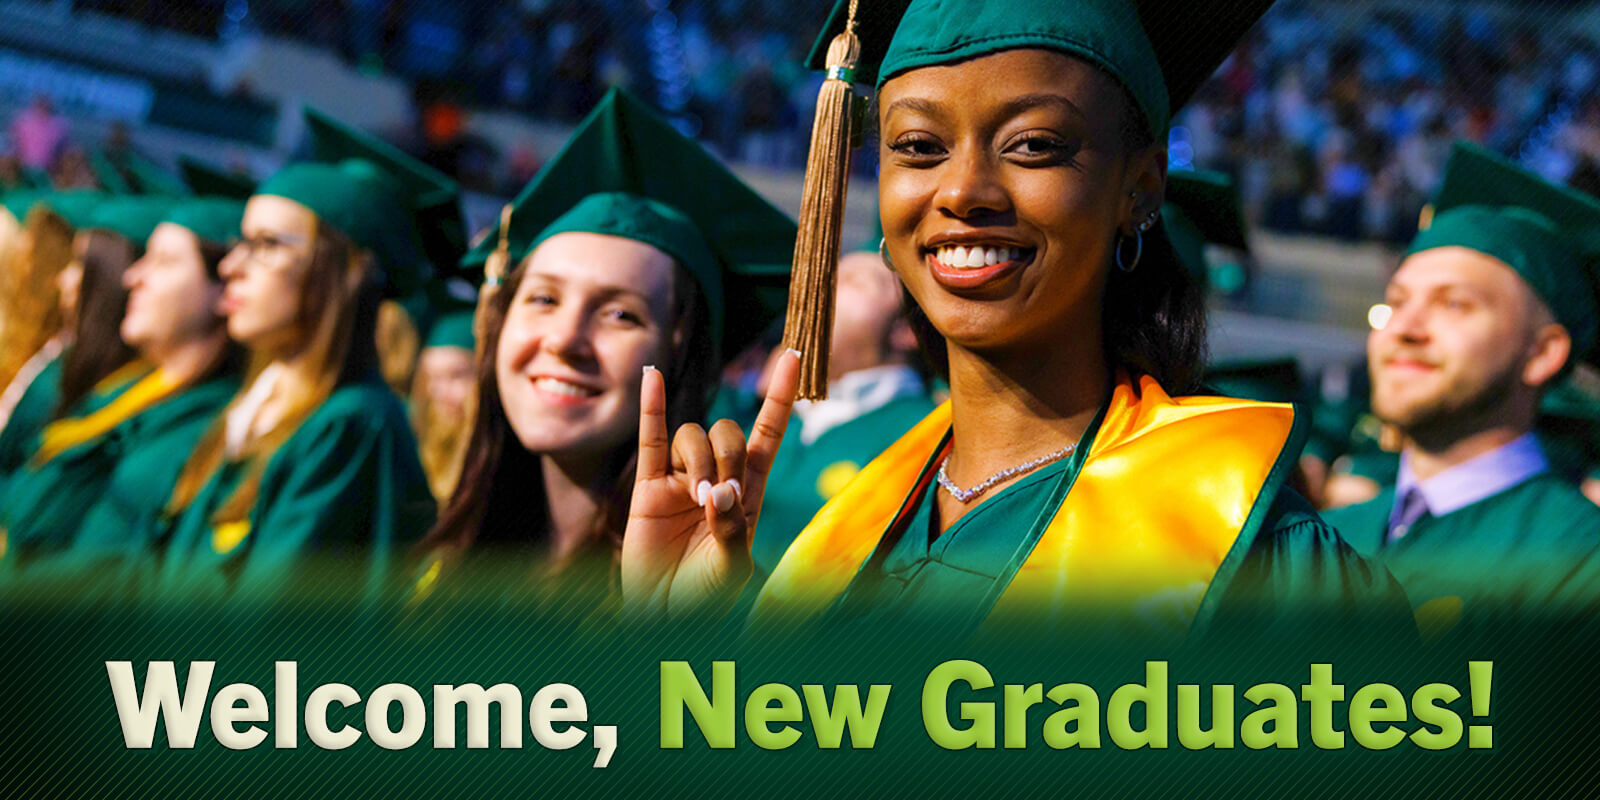 Welcome, New Graduates!